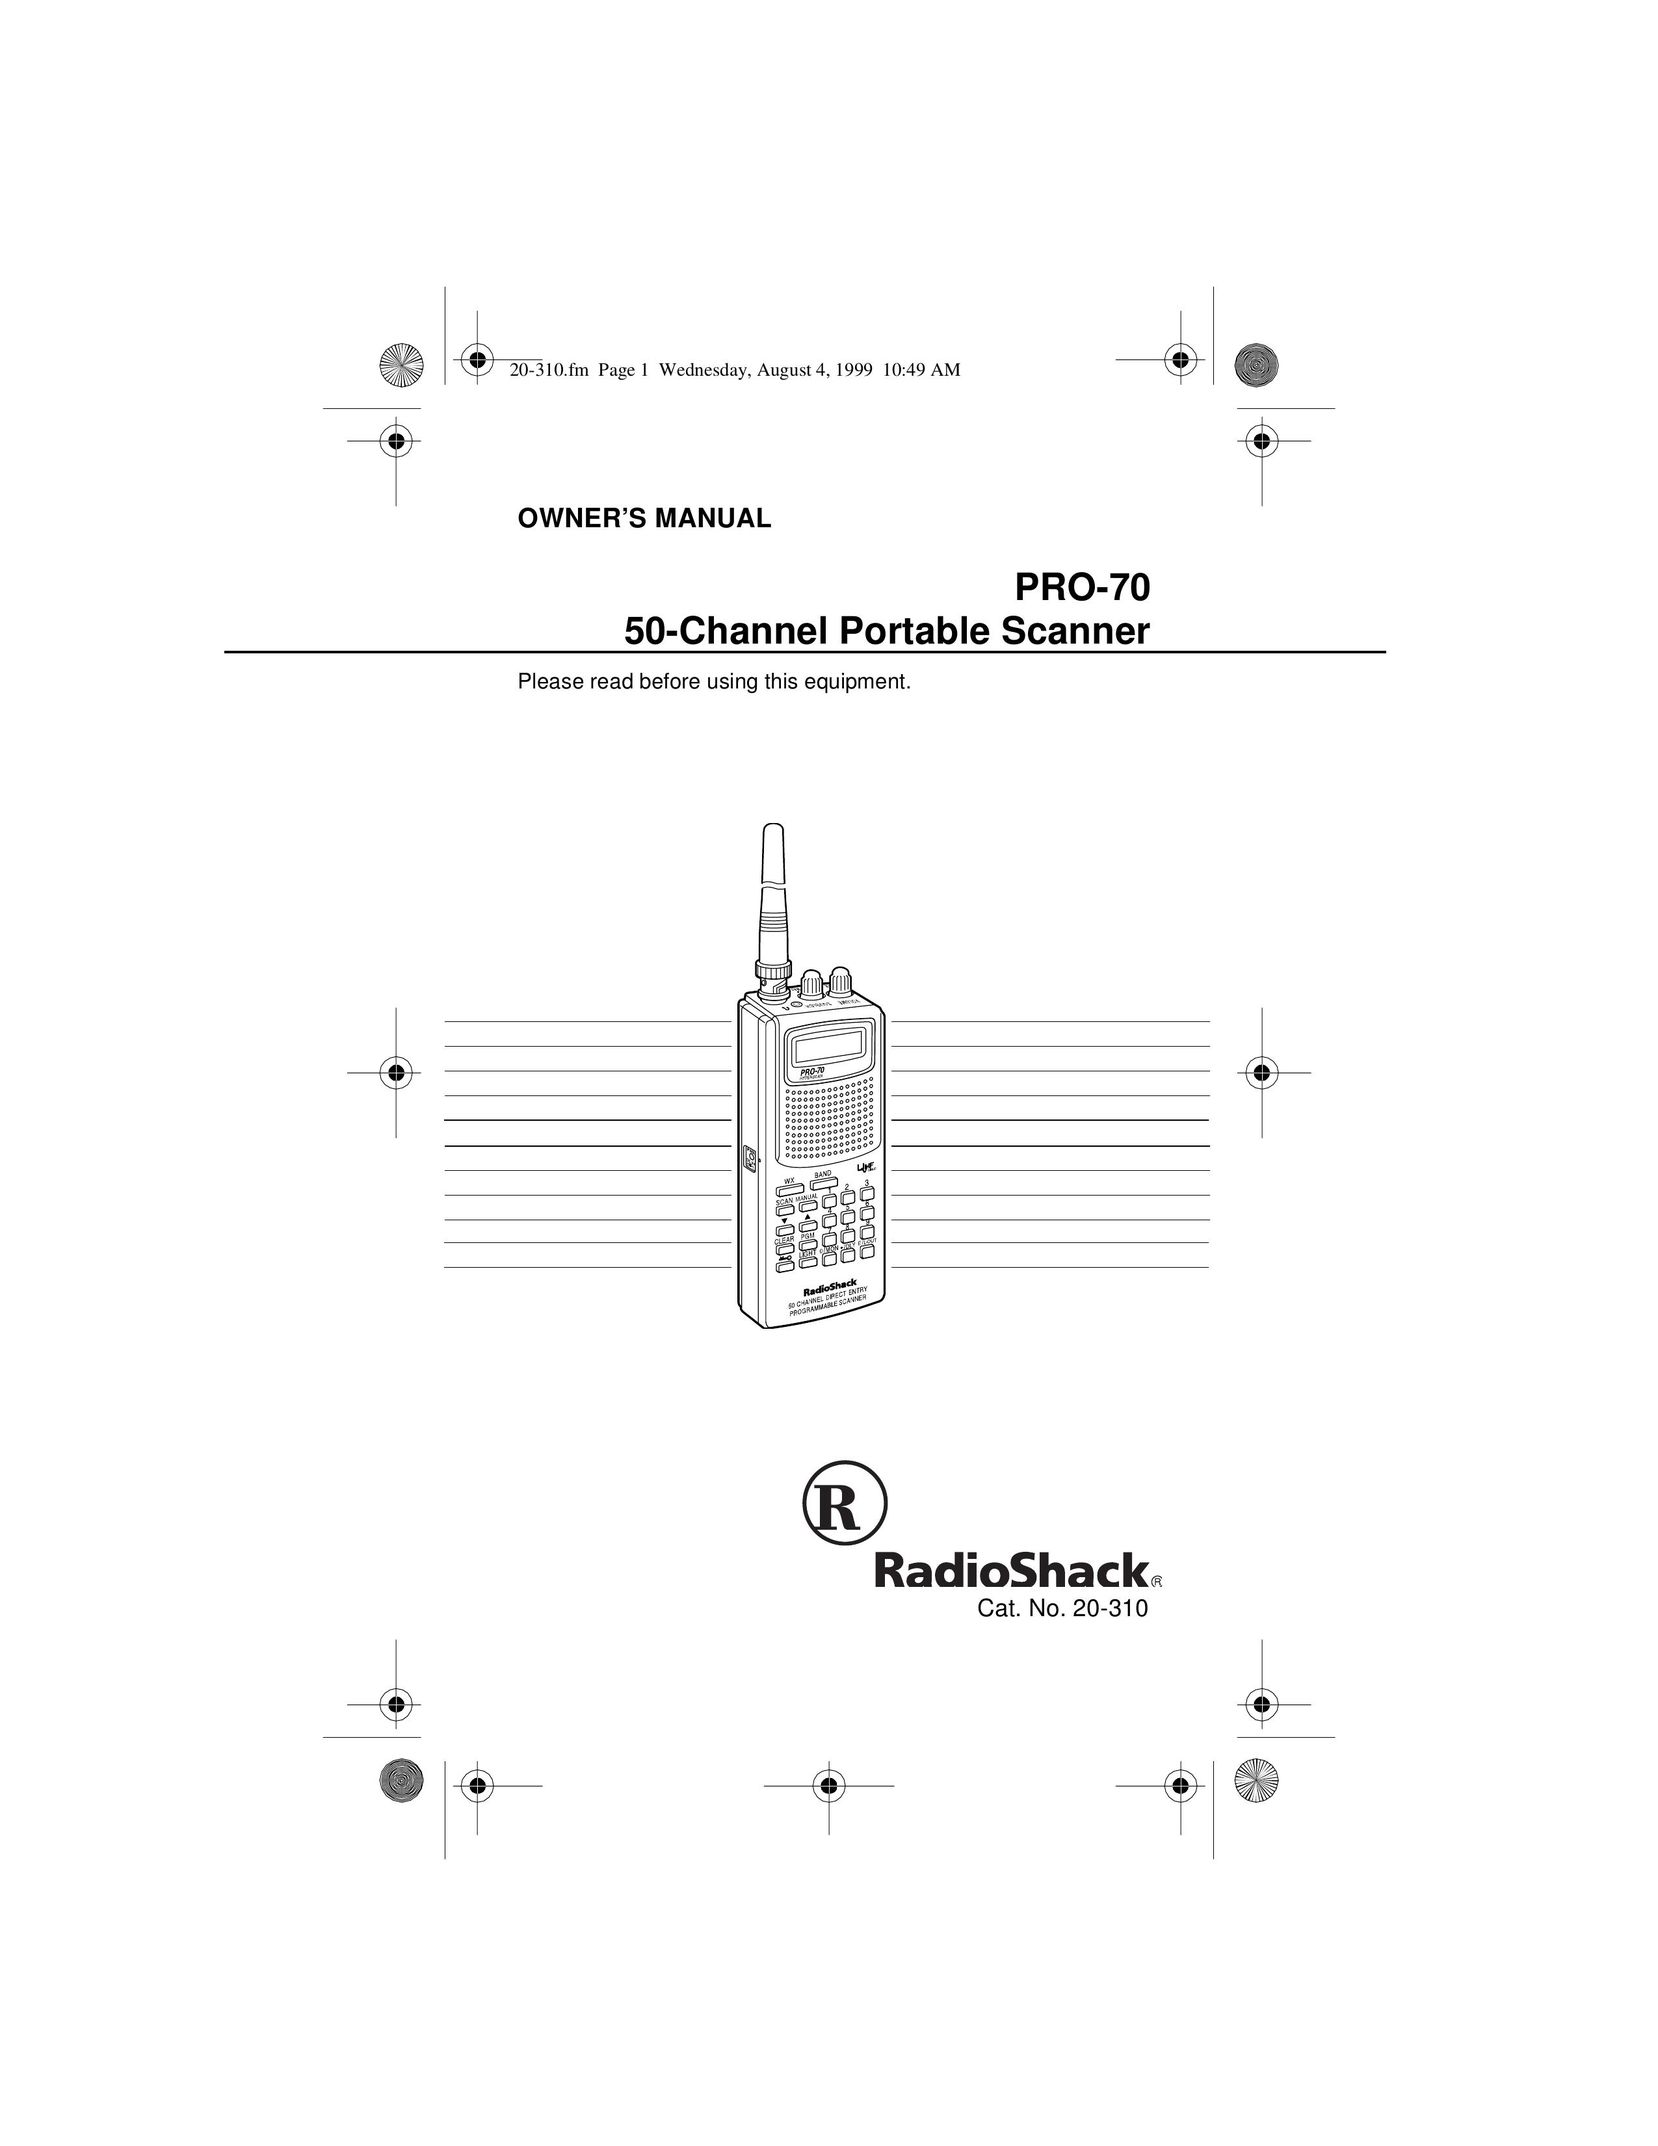 Radio Shack PRO-70 Scanner User Manual